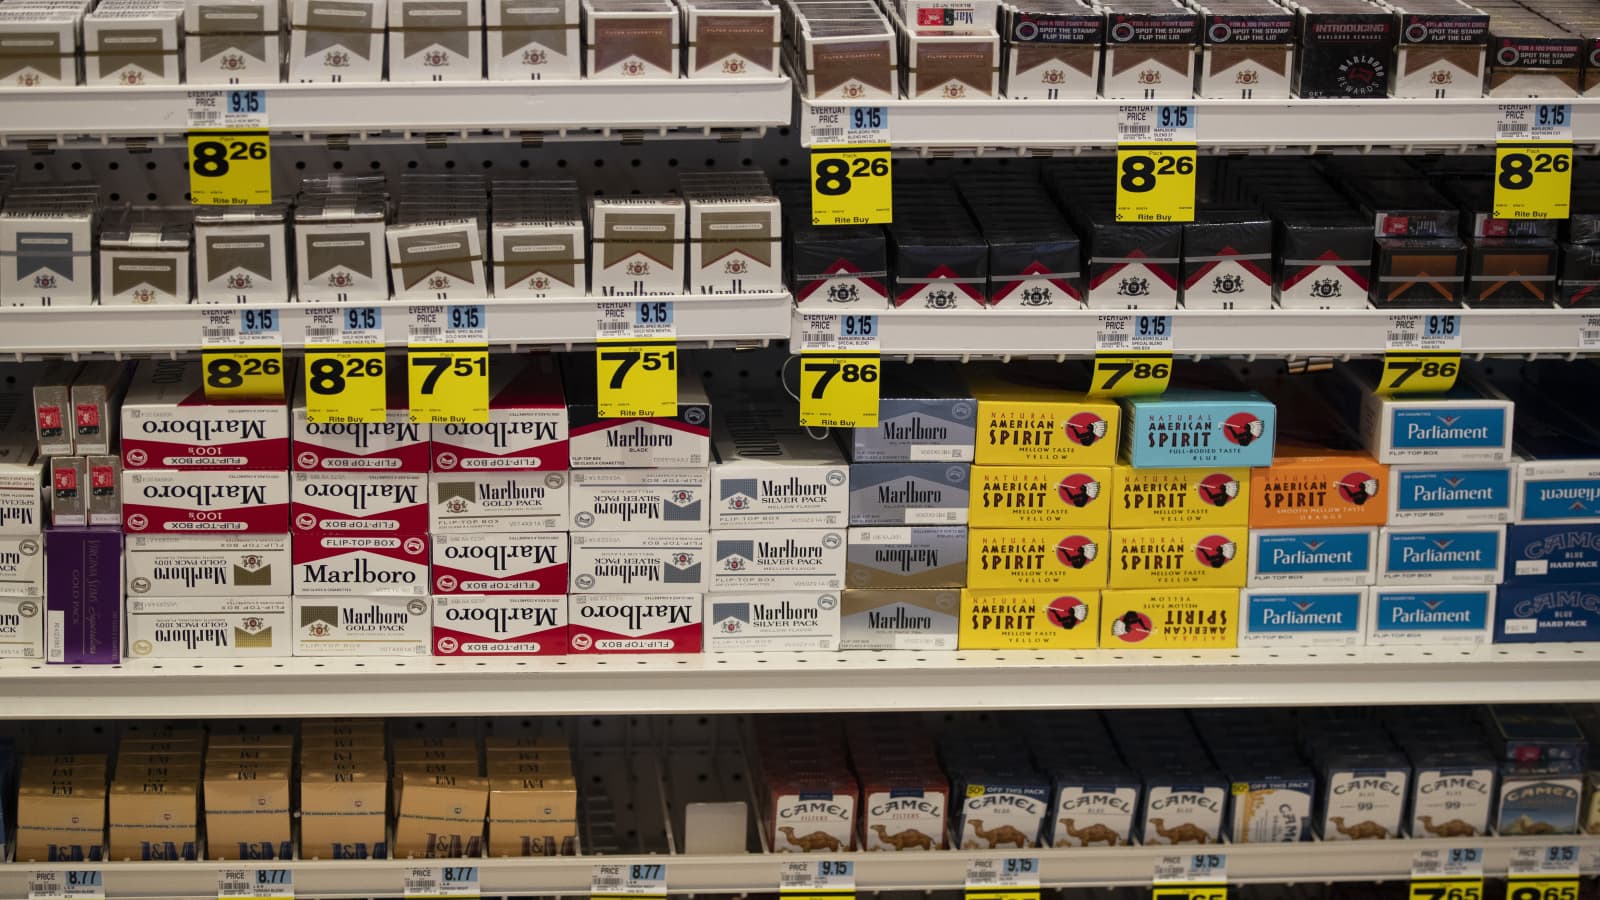 Does Walmart Sell Cigarettes, Cigars & E-ciggerates In 2022?